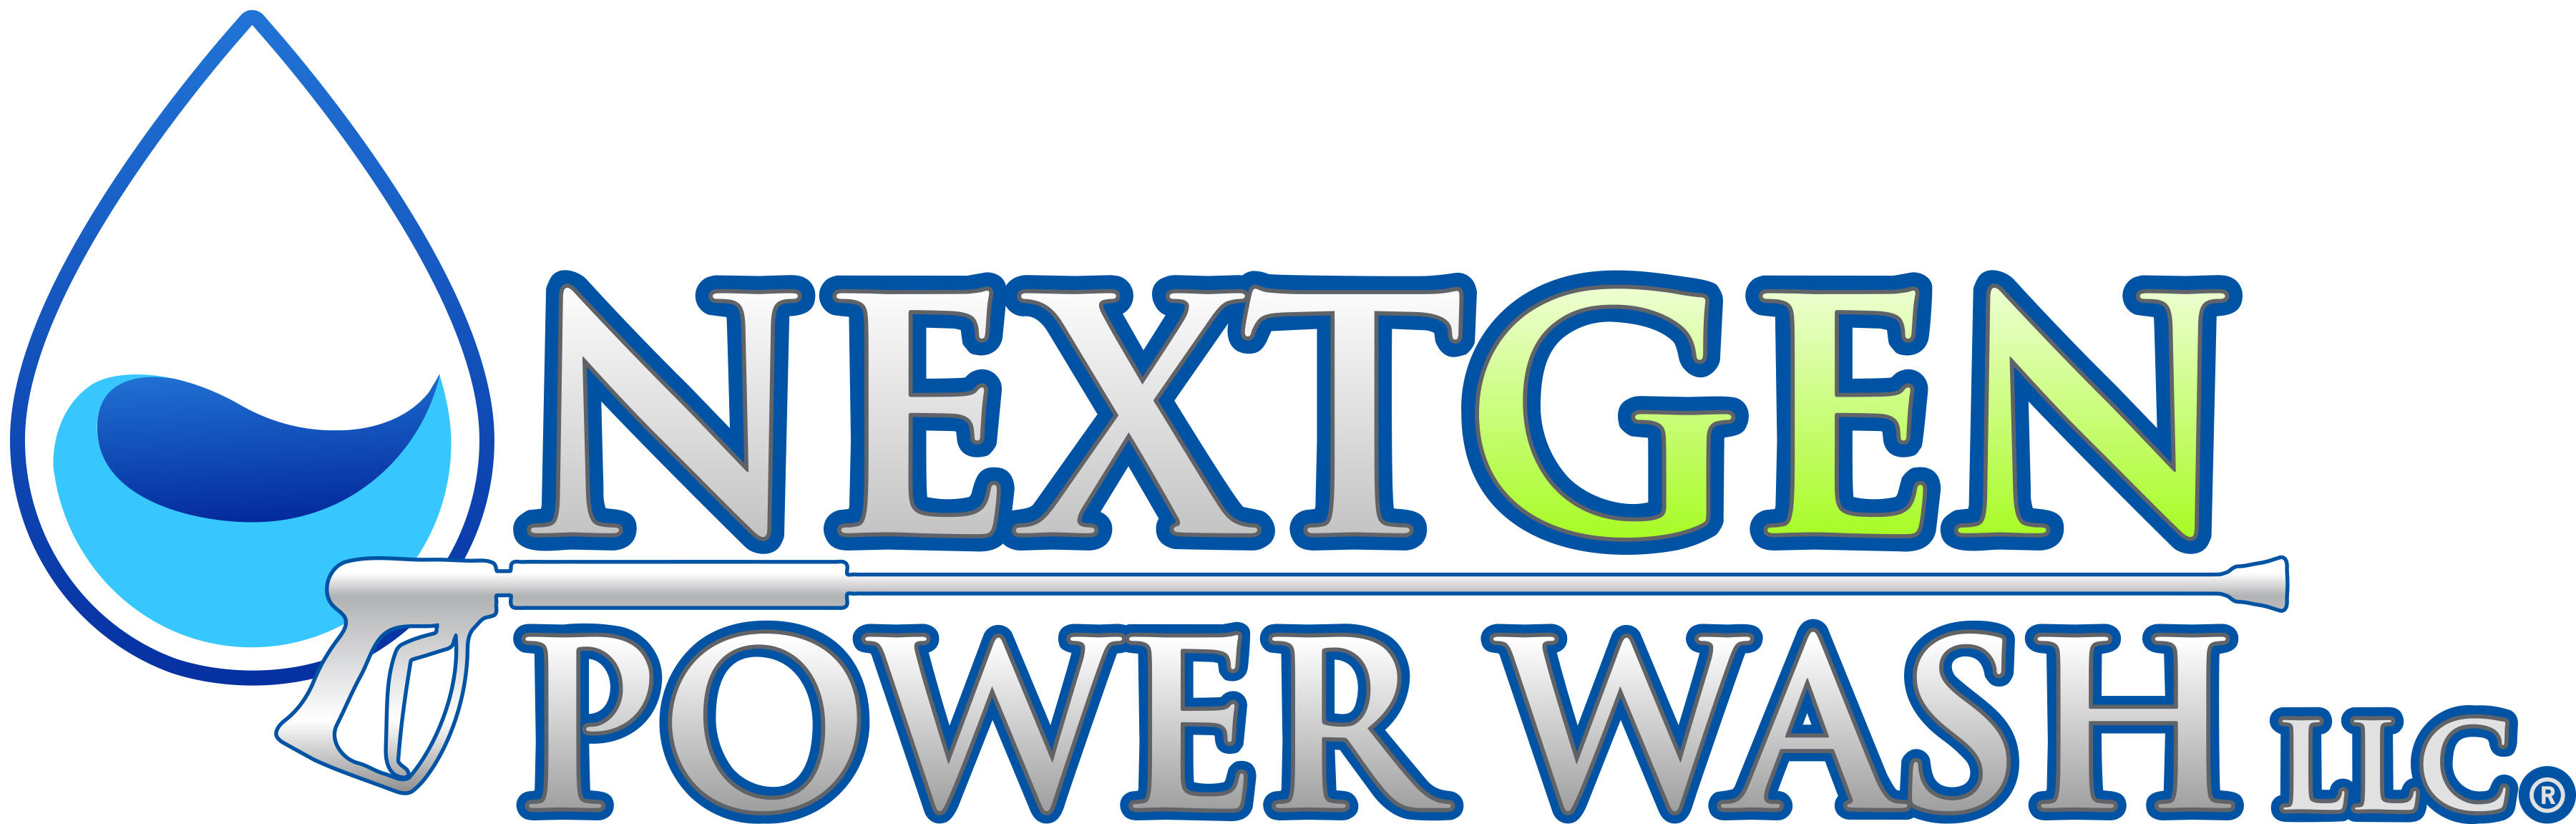 NextGen Power Wash LLC Logo Lewisburg Pennsylvania